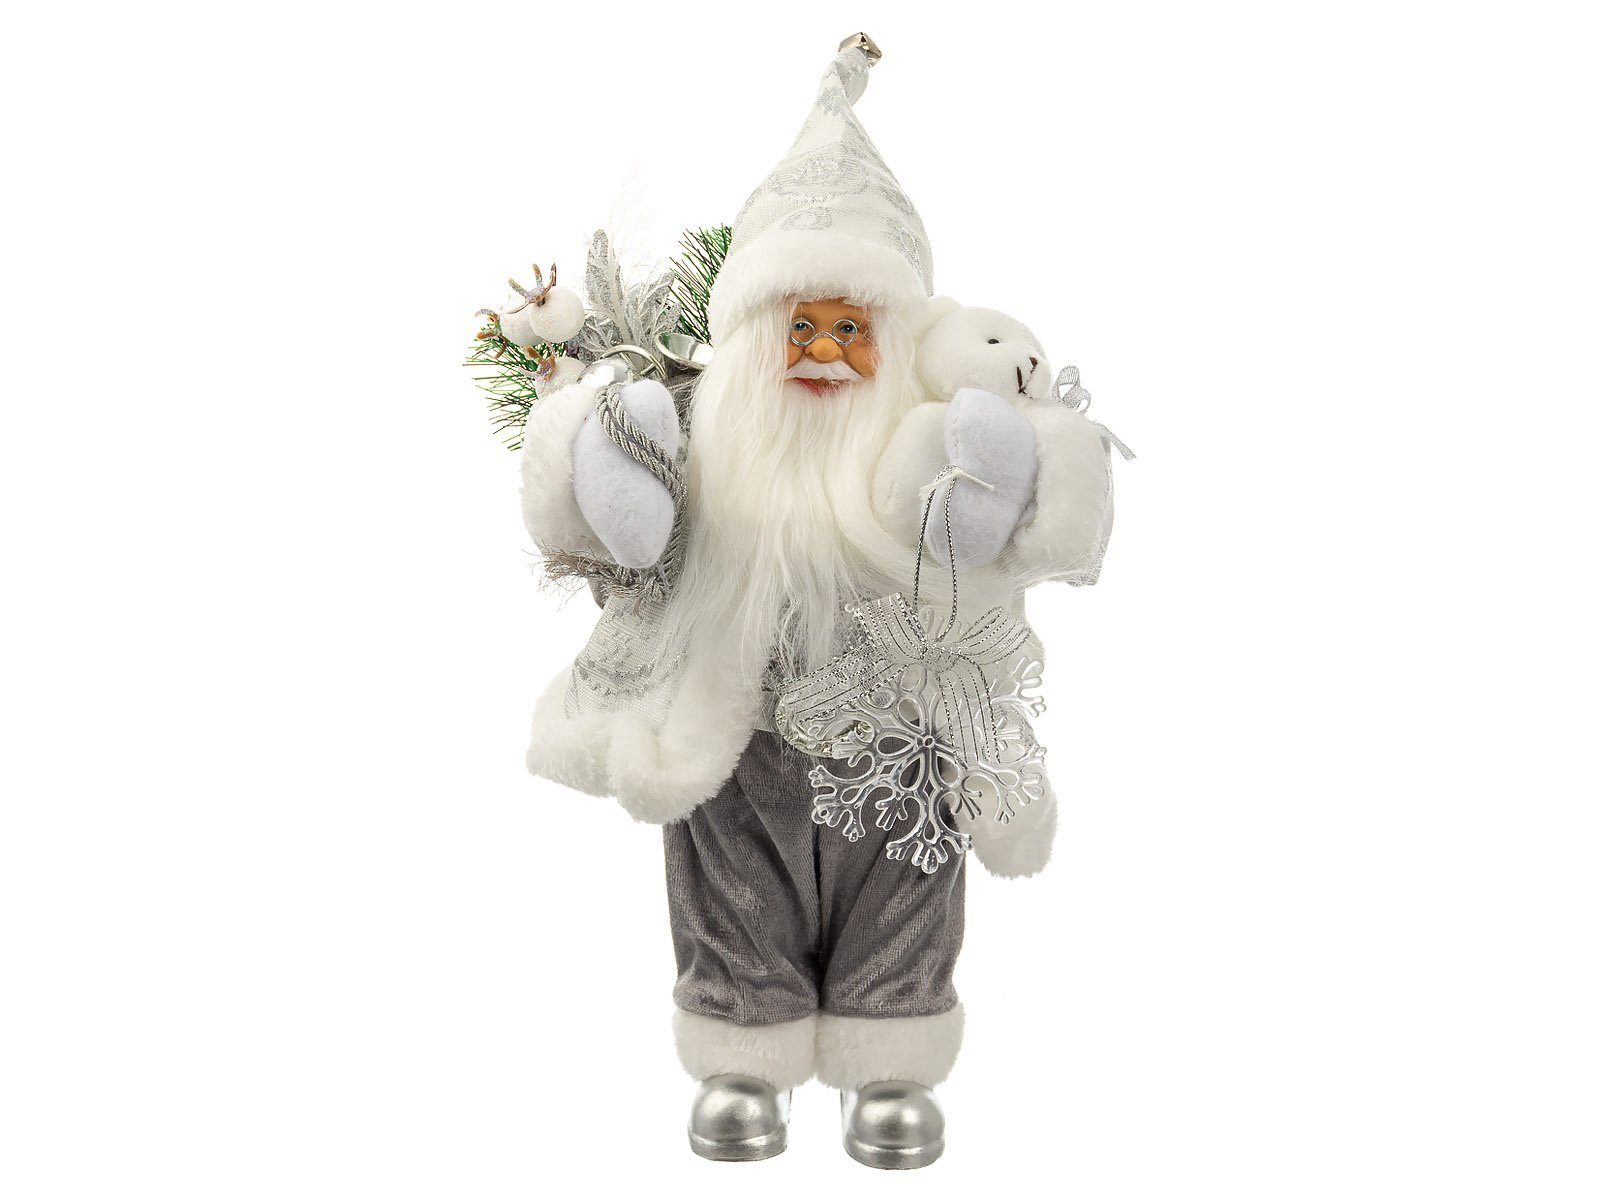 weiss/silber Weihnachtsmann "OLAF" St), silber Christmas (1 45575-30-weiss/grau weiß Klaus Paradise / Weihnachtsmann Santa